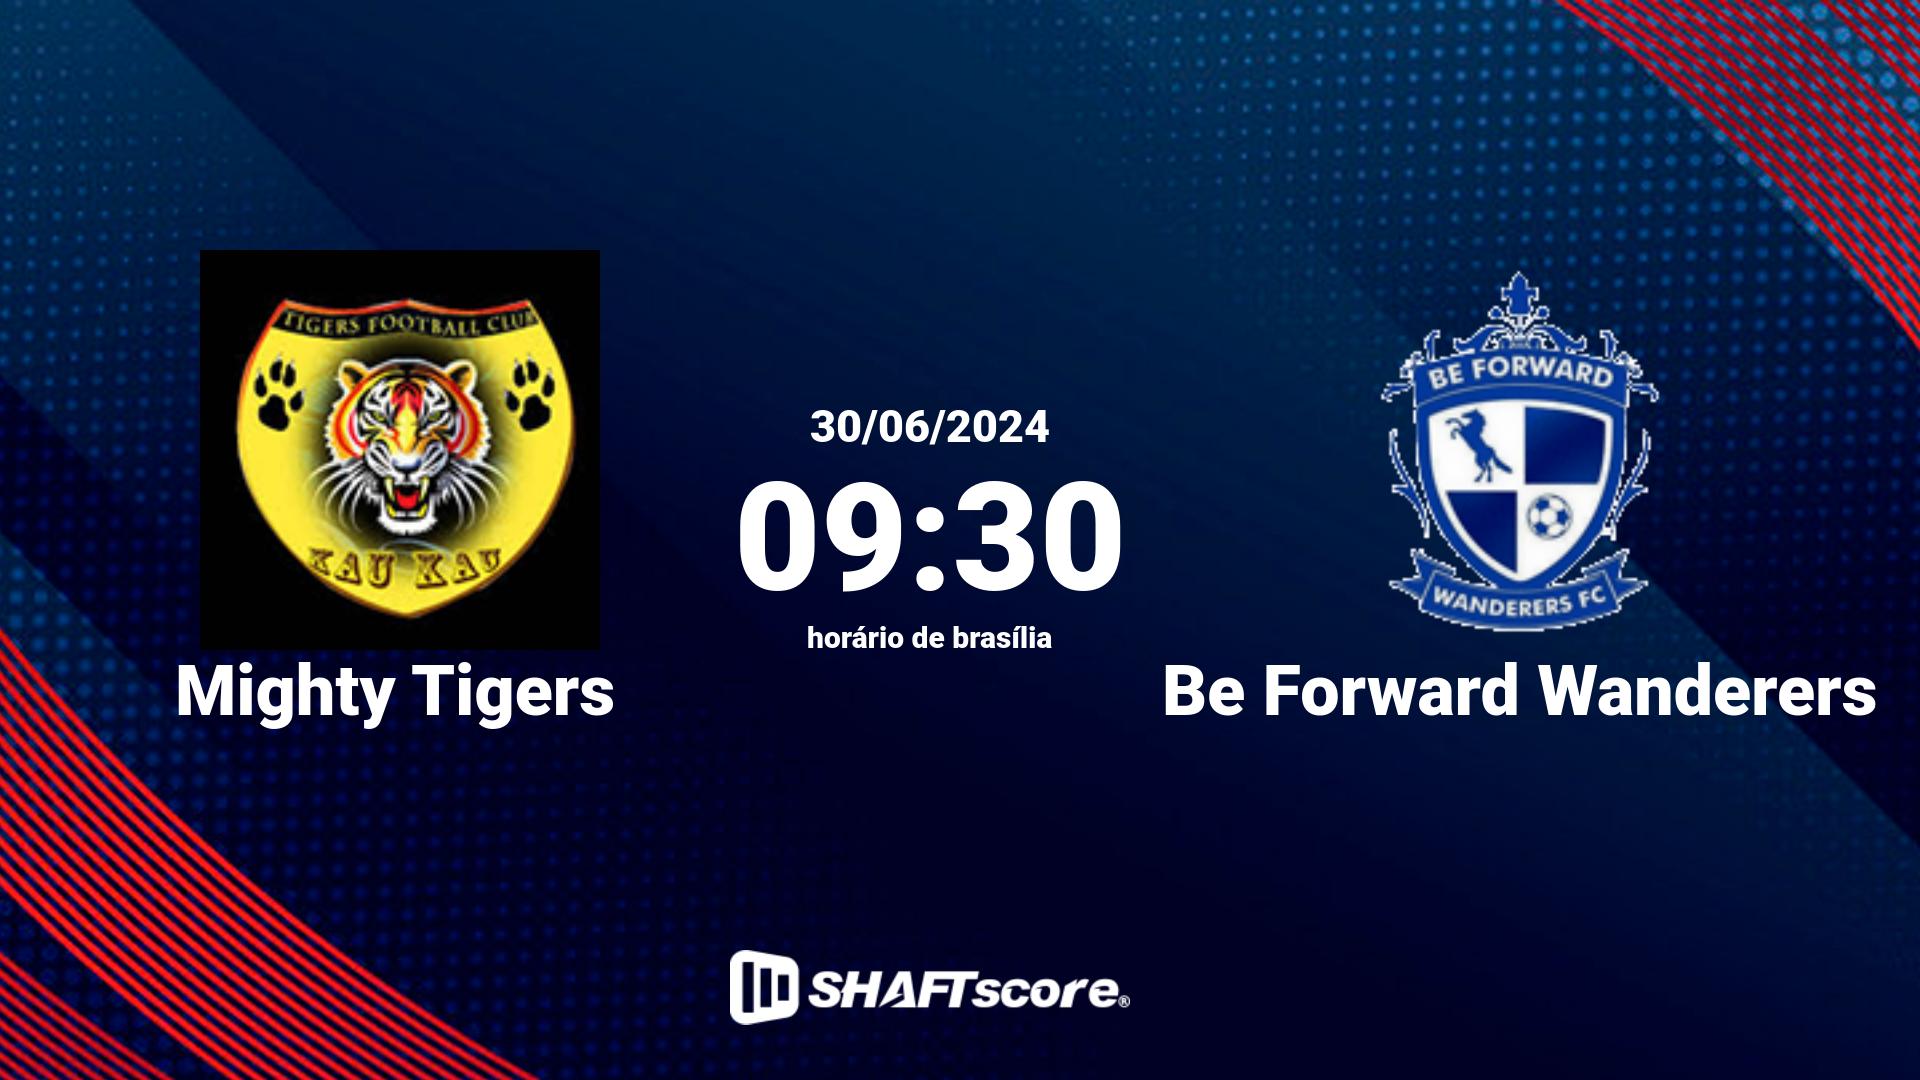 Estatísticas do jogo Mighty Tigers vs Be Forward Wanderers 30.06 09:30